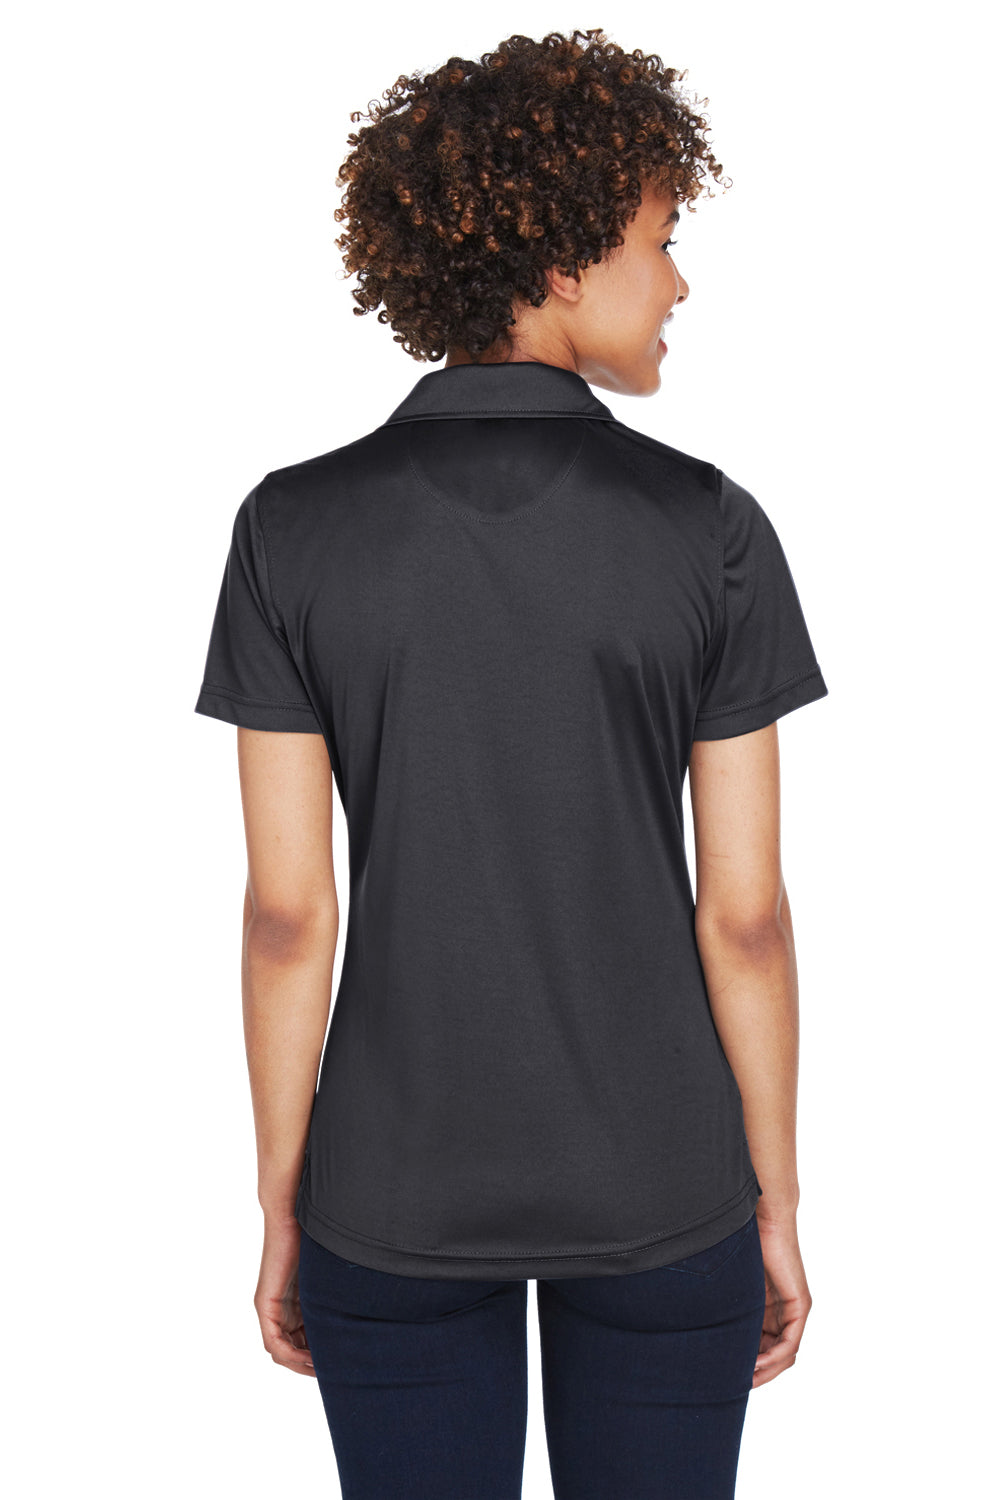 UltraClub 8425L Womens Cool & Dry Performance Moisture Wicking Short Sleeve Polo Shirt Black Back